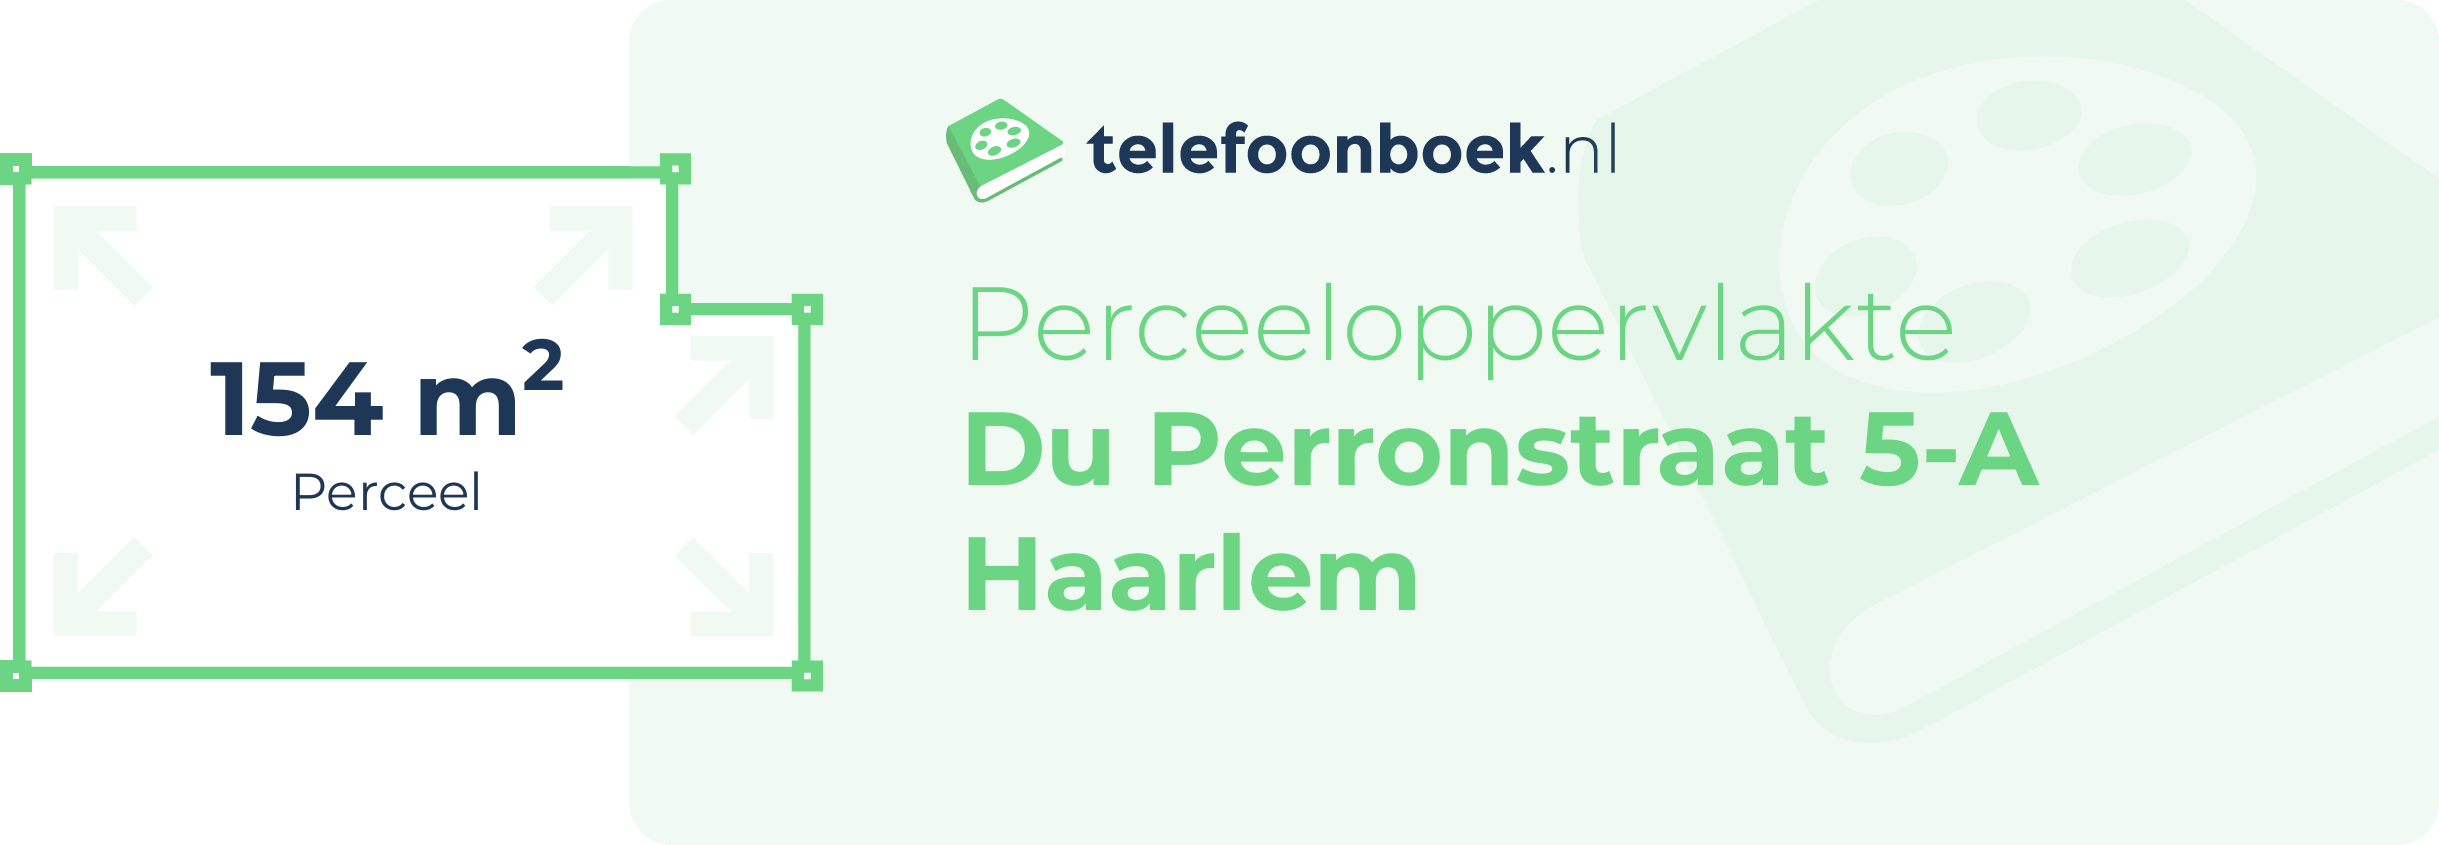 Perceeloppervlakte Du Perronstraat 5-A Haarlem